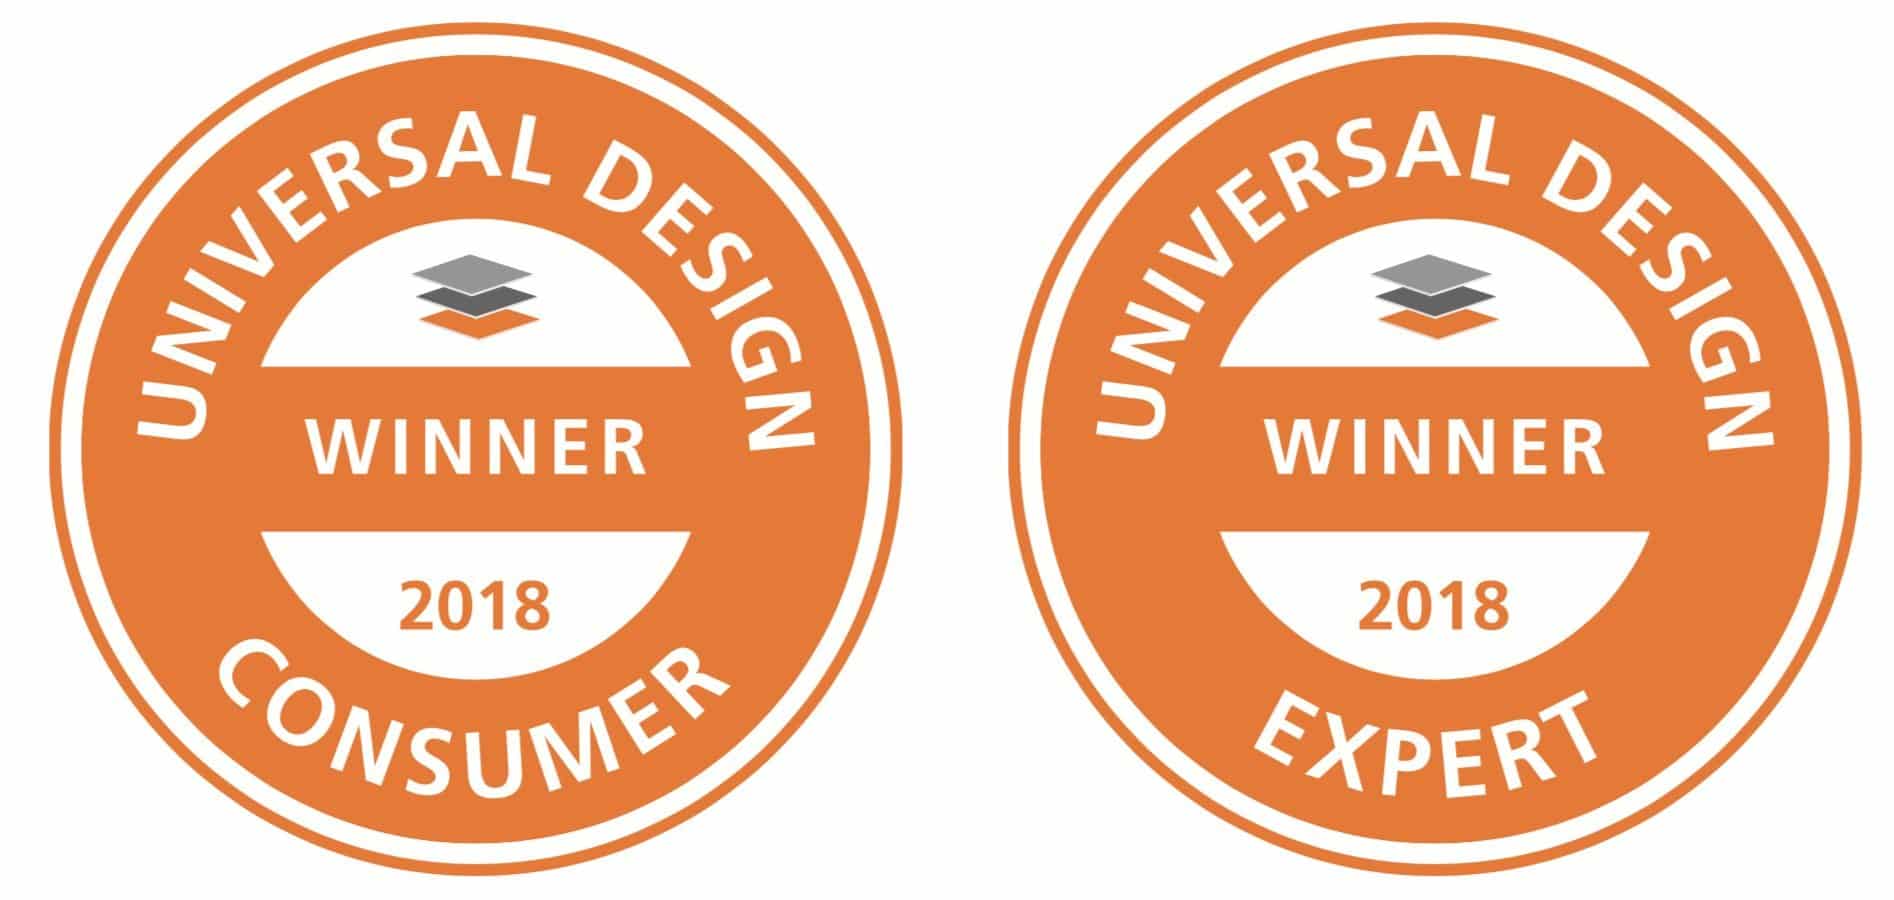 universal design winner consumer and expert 2018